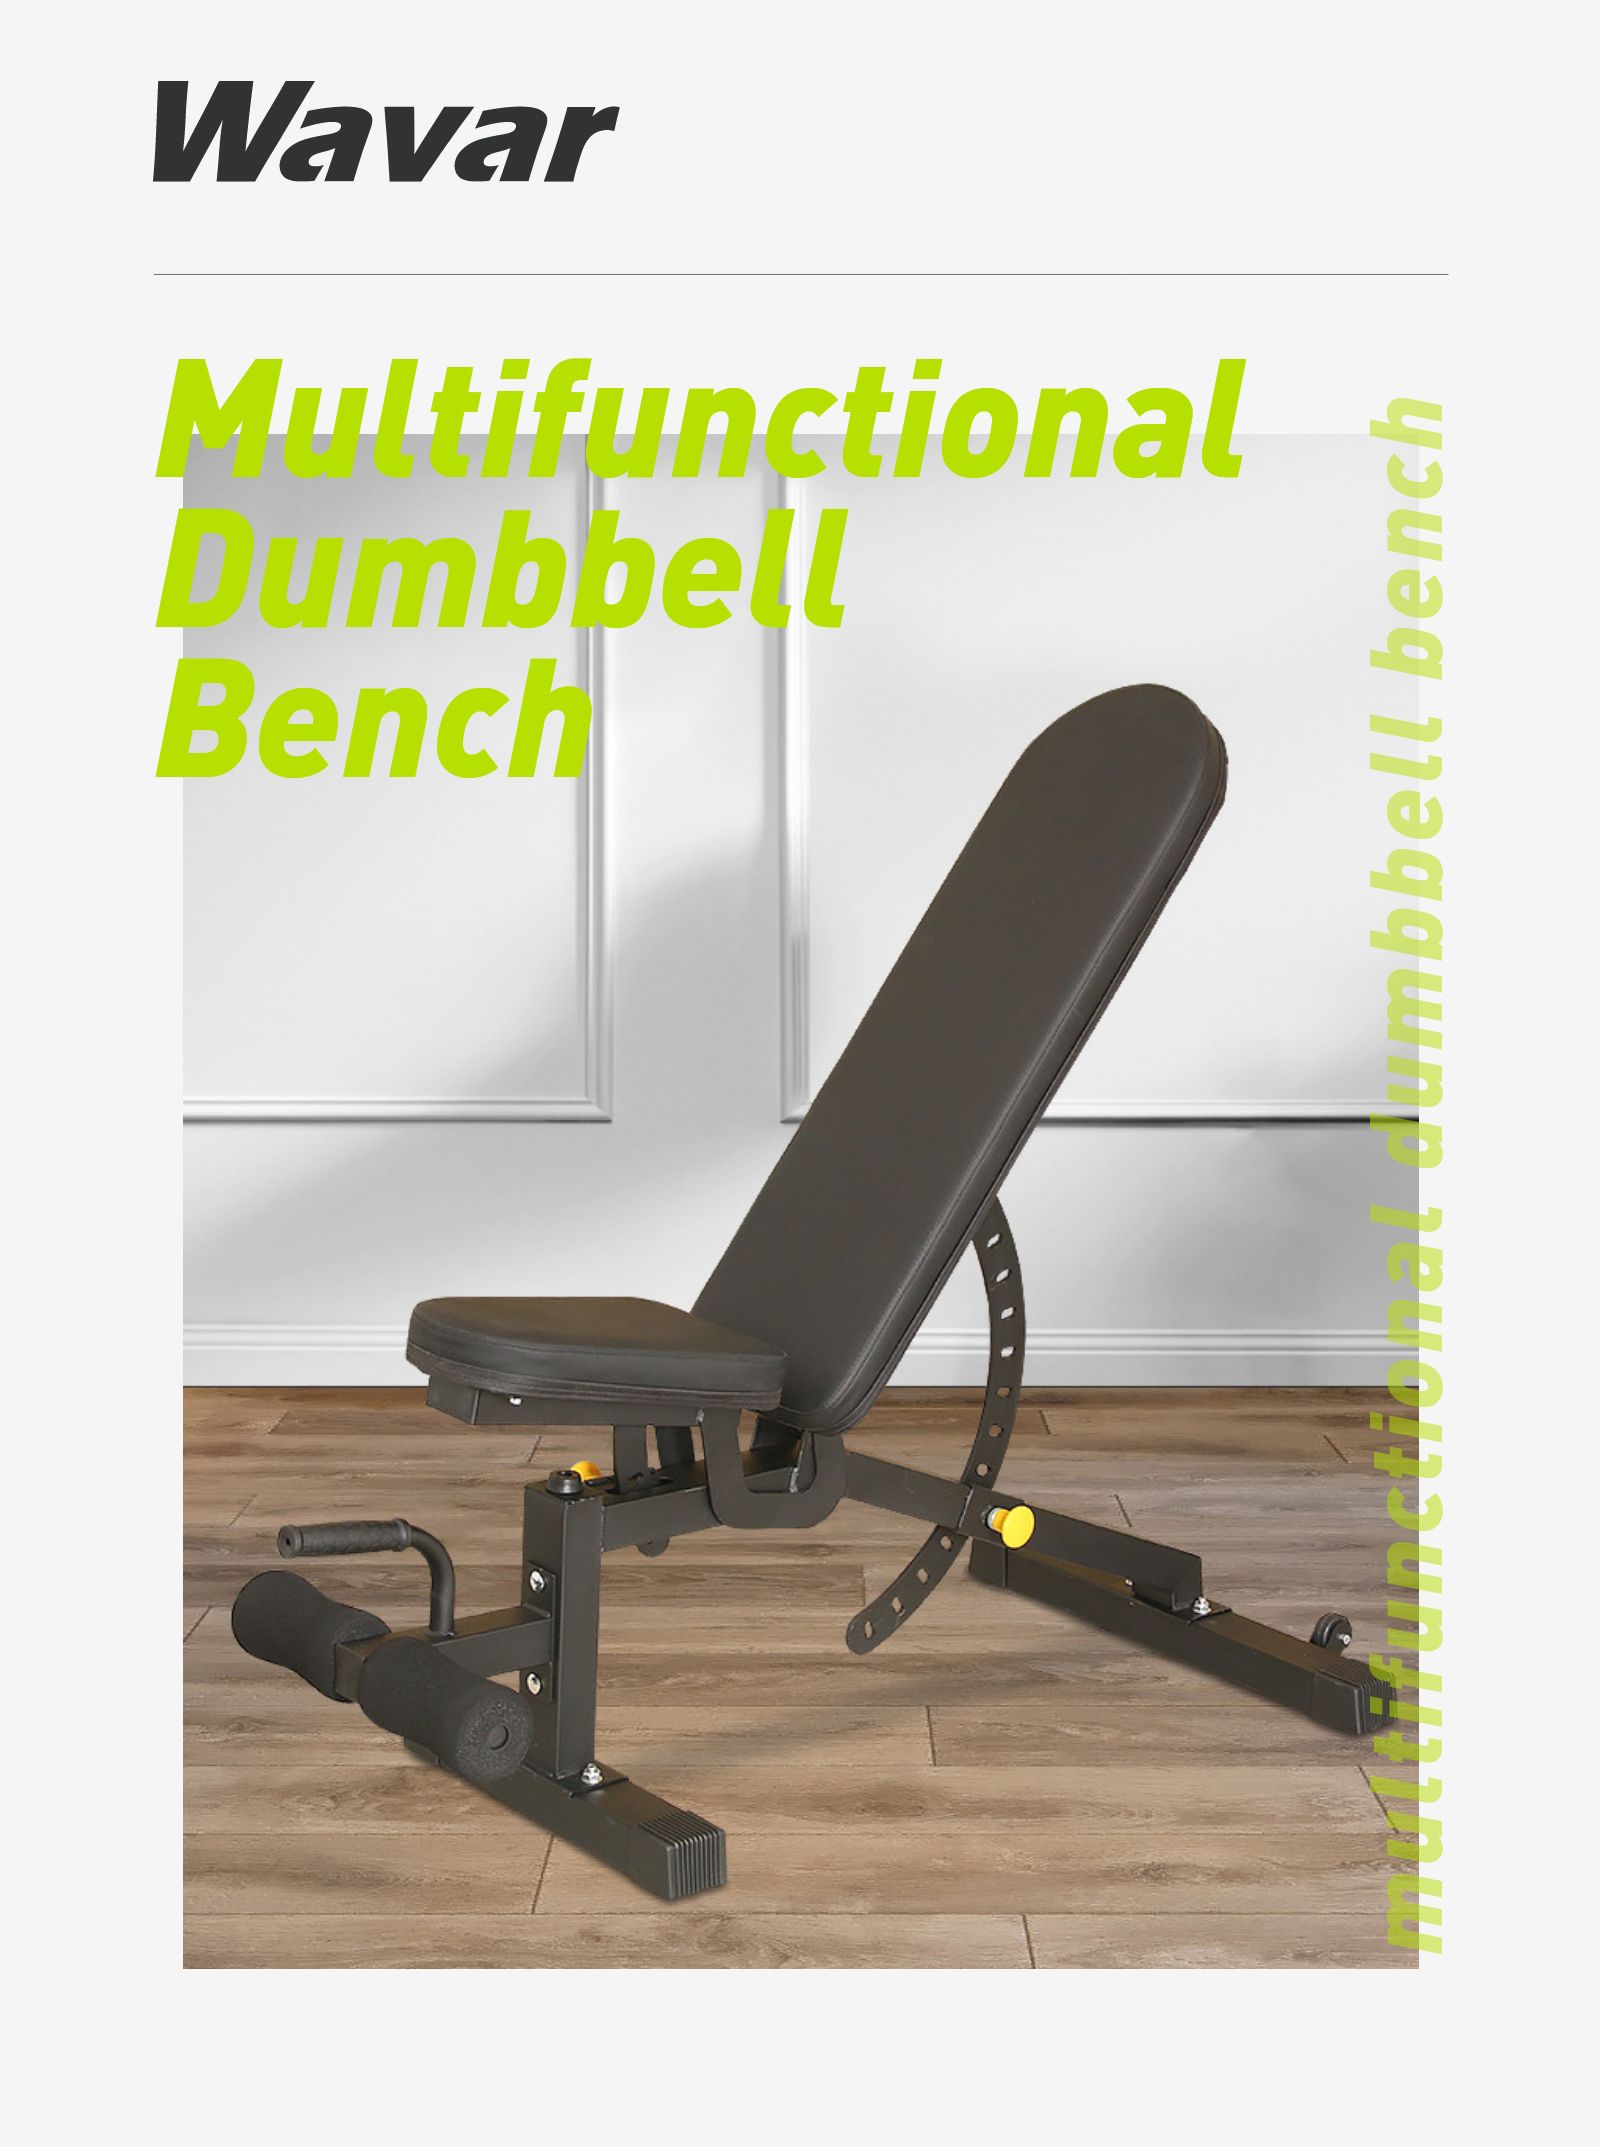 Multifunctional Dumbbell Bench